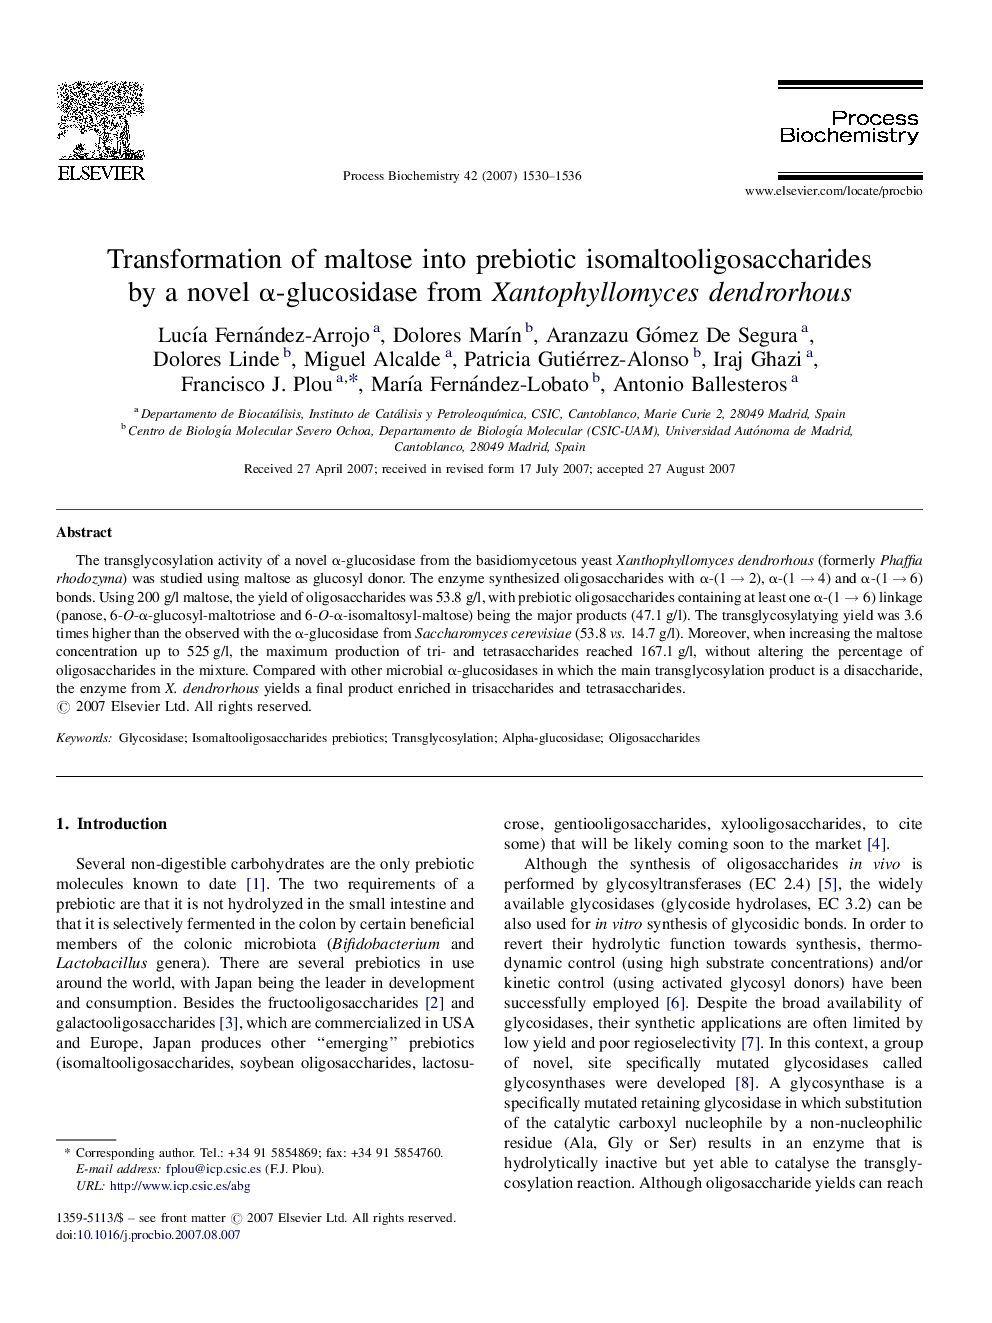 Transformation of maltose into prebiotic isomaltooligosaccharides by a novel α-glucosidase from Xantophyllomyces dendrorhous